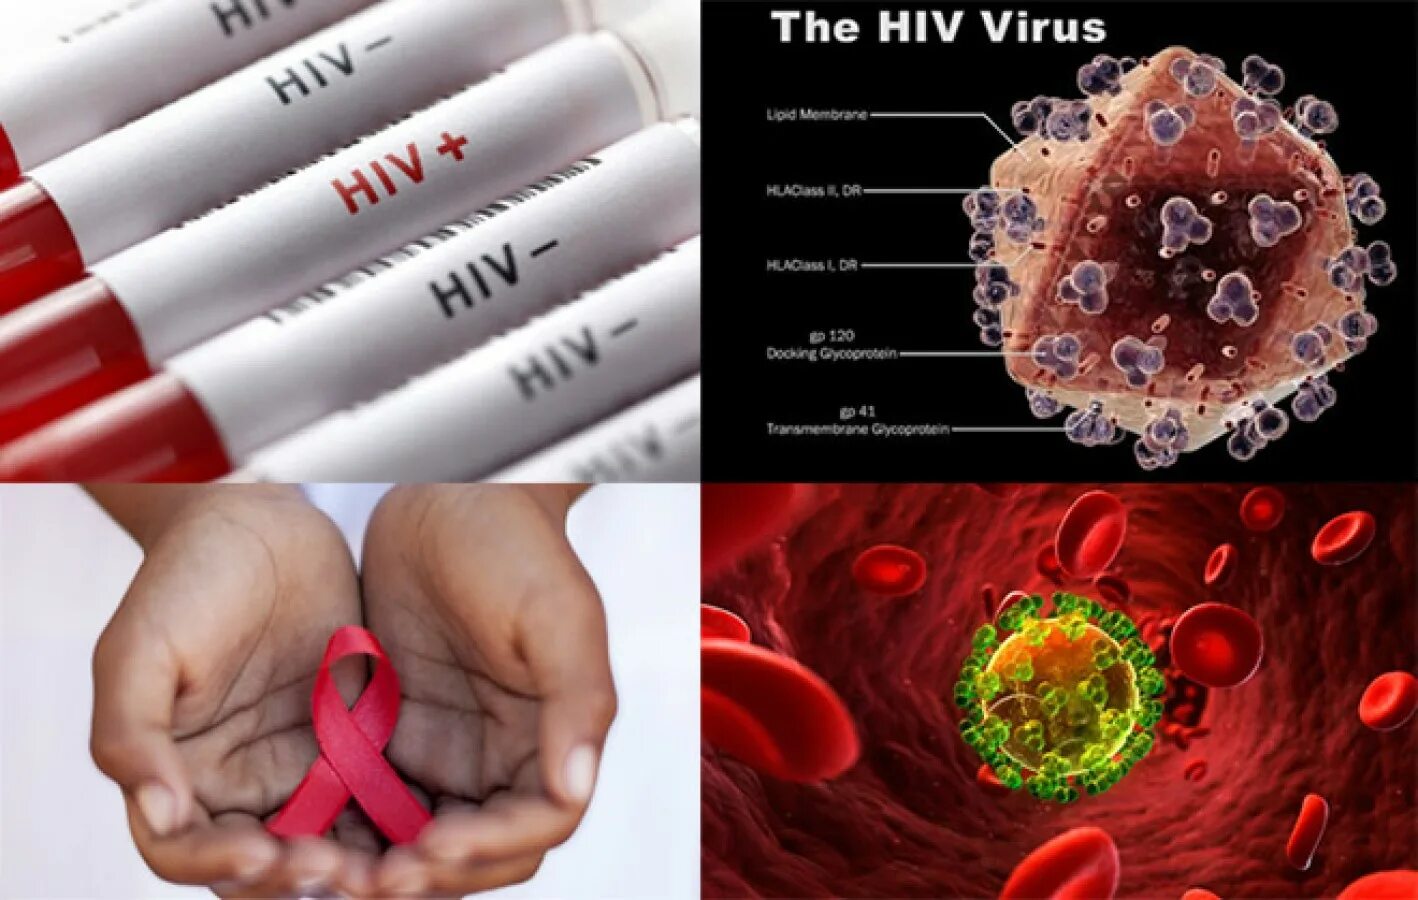 Нон спид. ВИЧ инфекция. СПИД. Фото ВИЧ инфицированных.